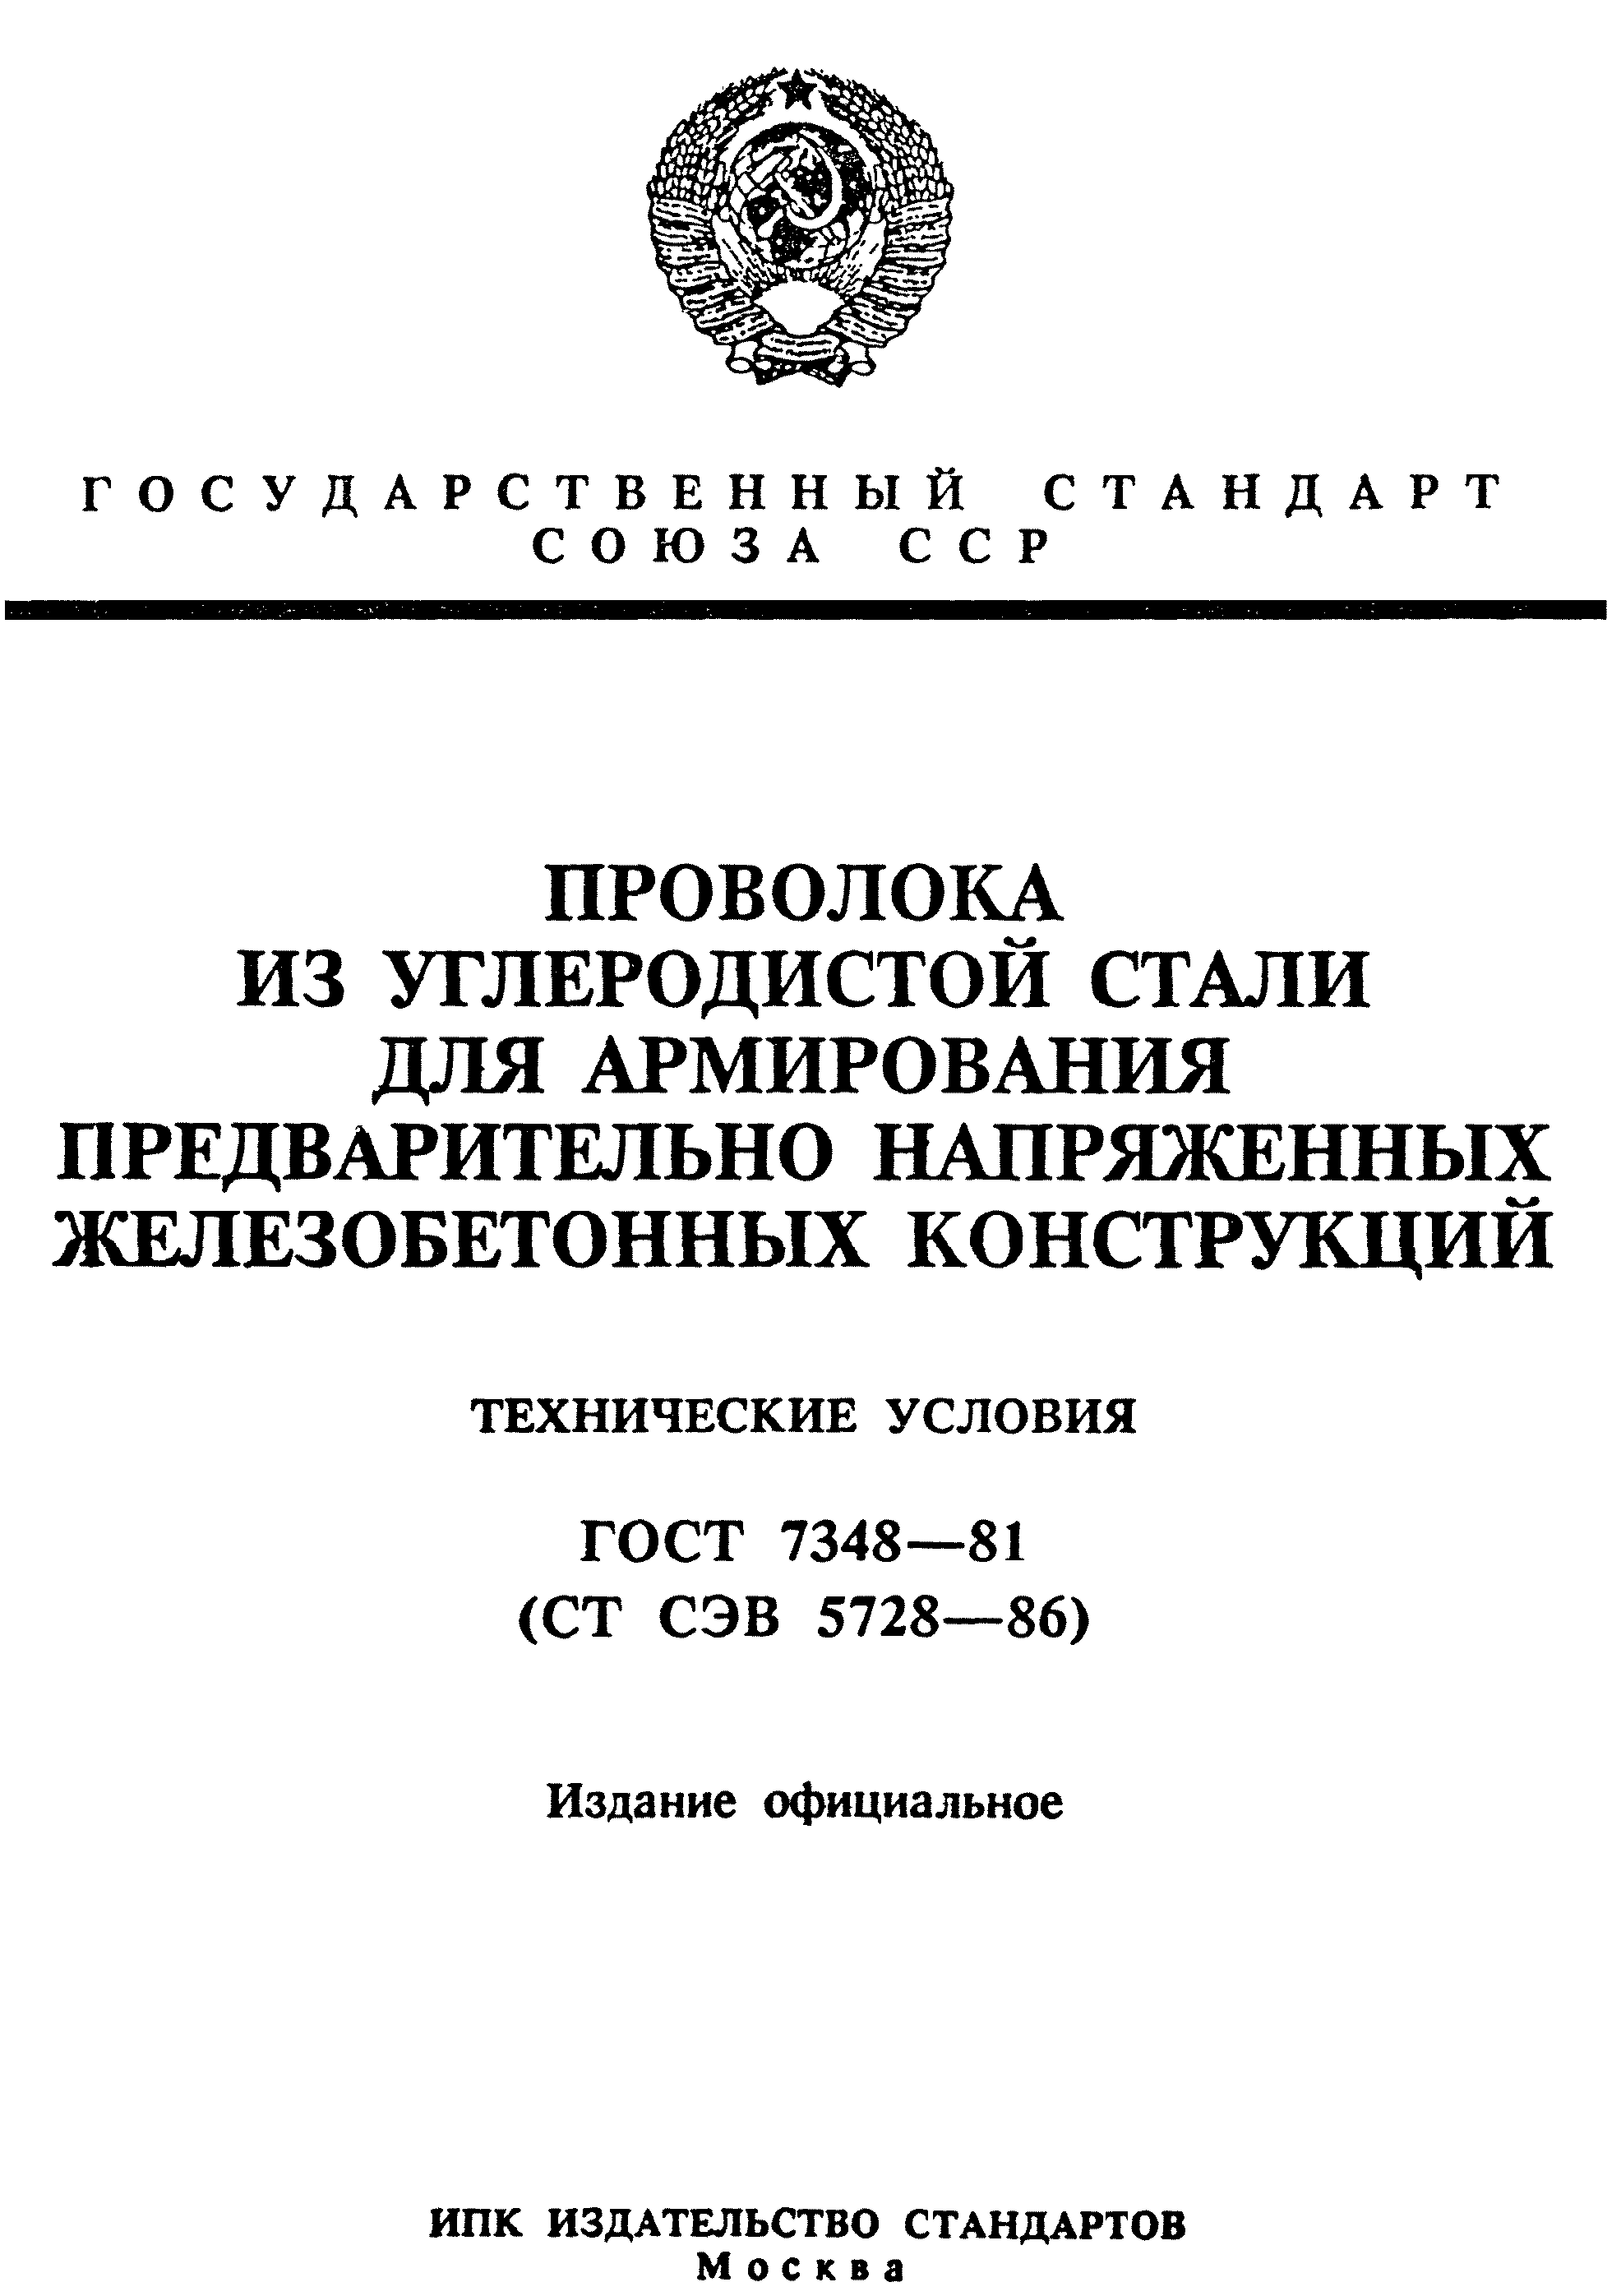 ГОСТ 7348-81